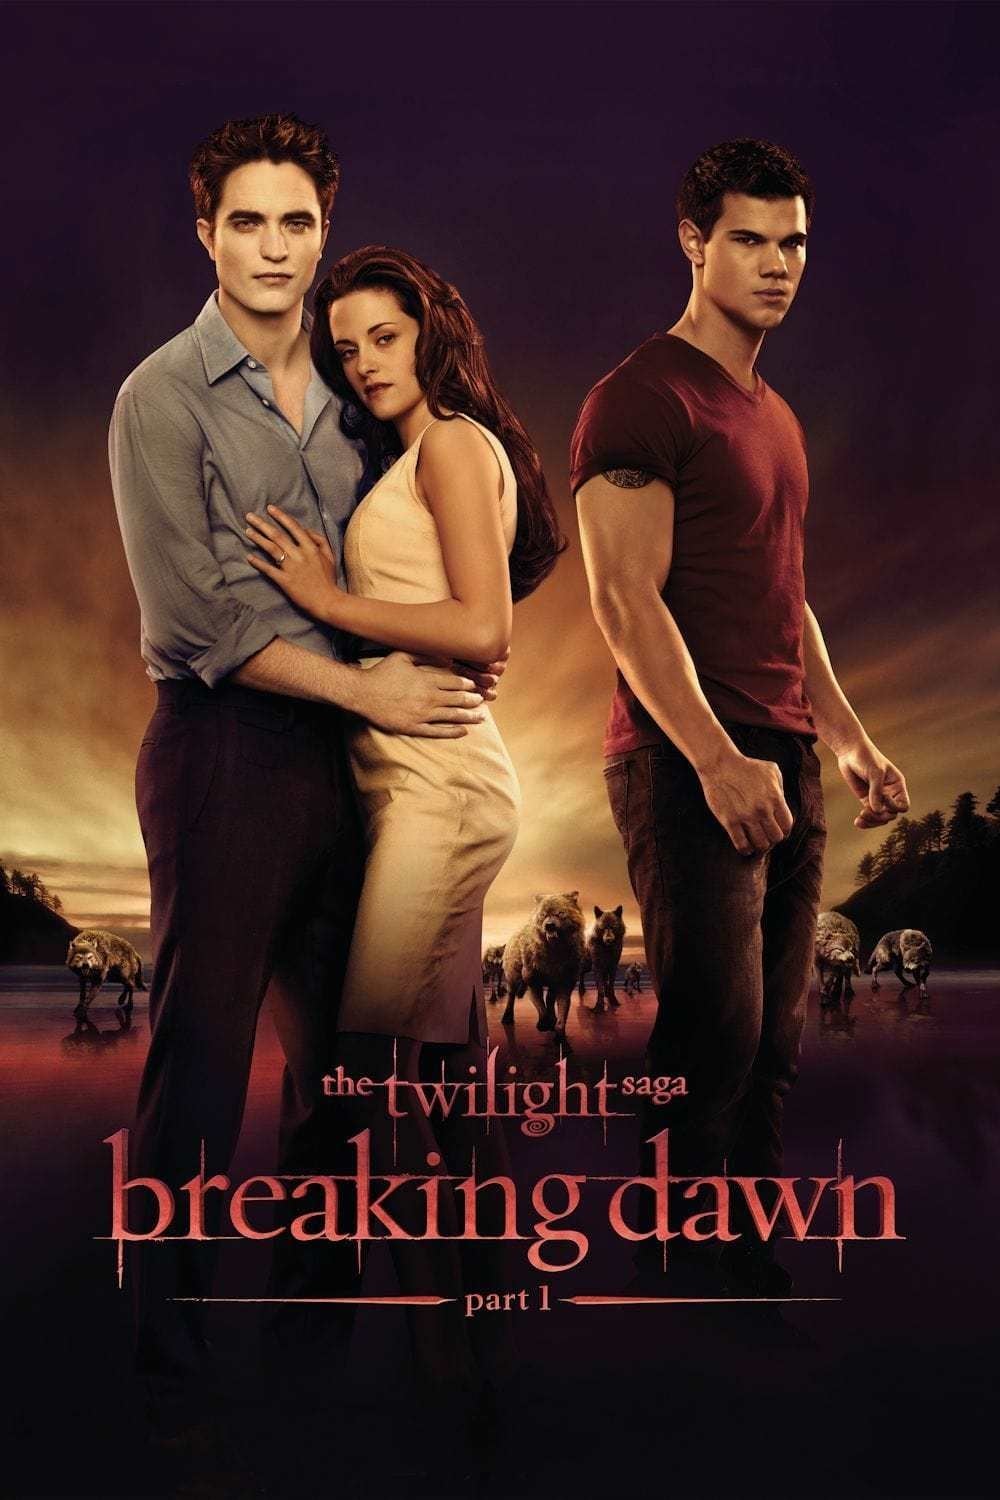 the twilight saga: breaking dawn - part 1 Picture